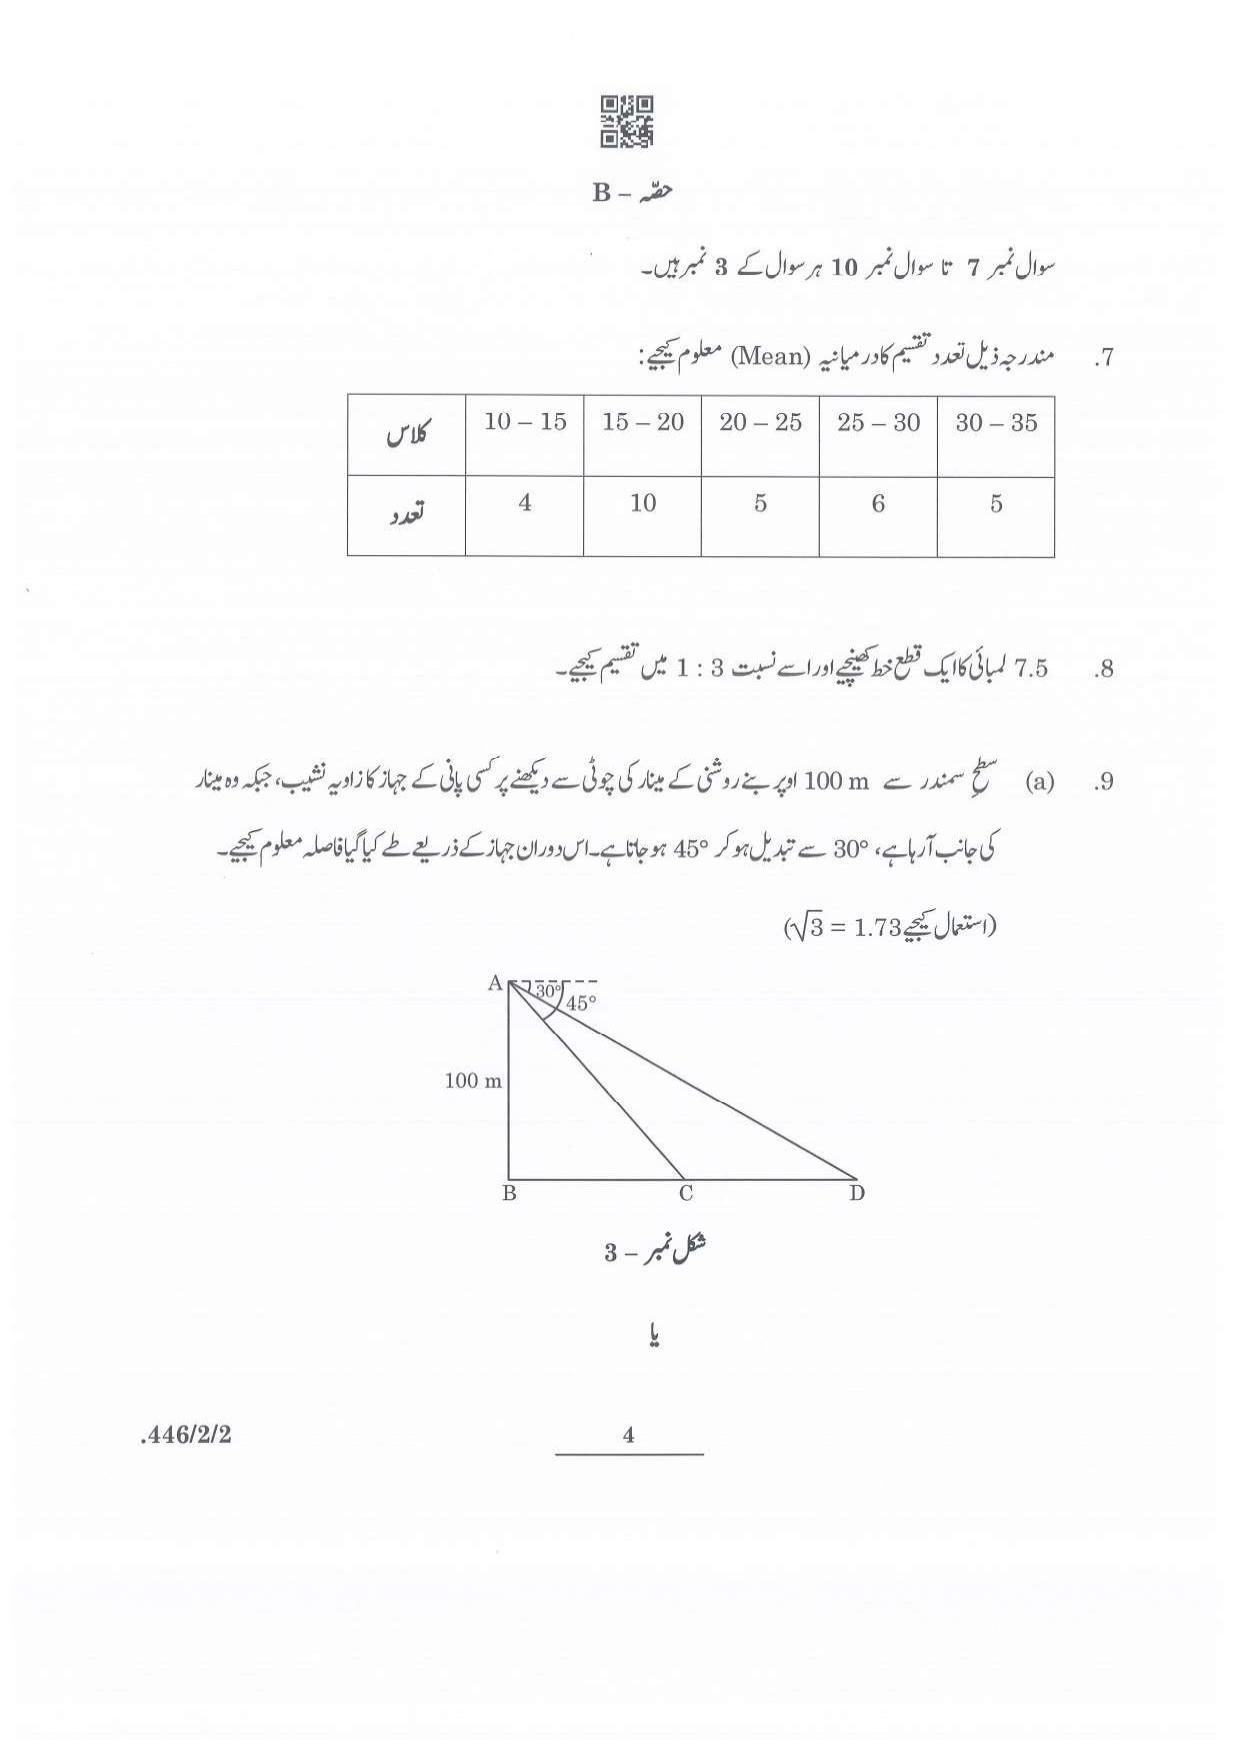 CBSE Class 10 Maths Basic - Urdu (446/2/2 - SET 2) 2022 Question Paper - Page 4